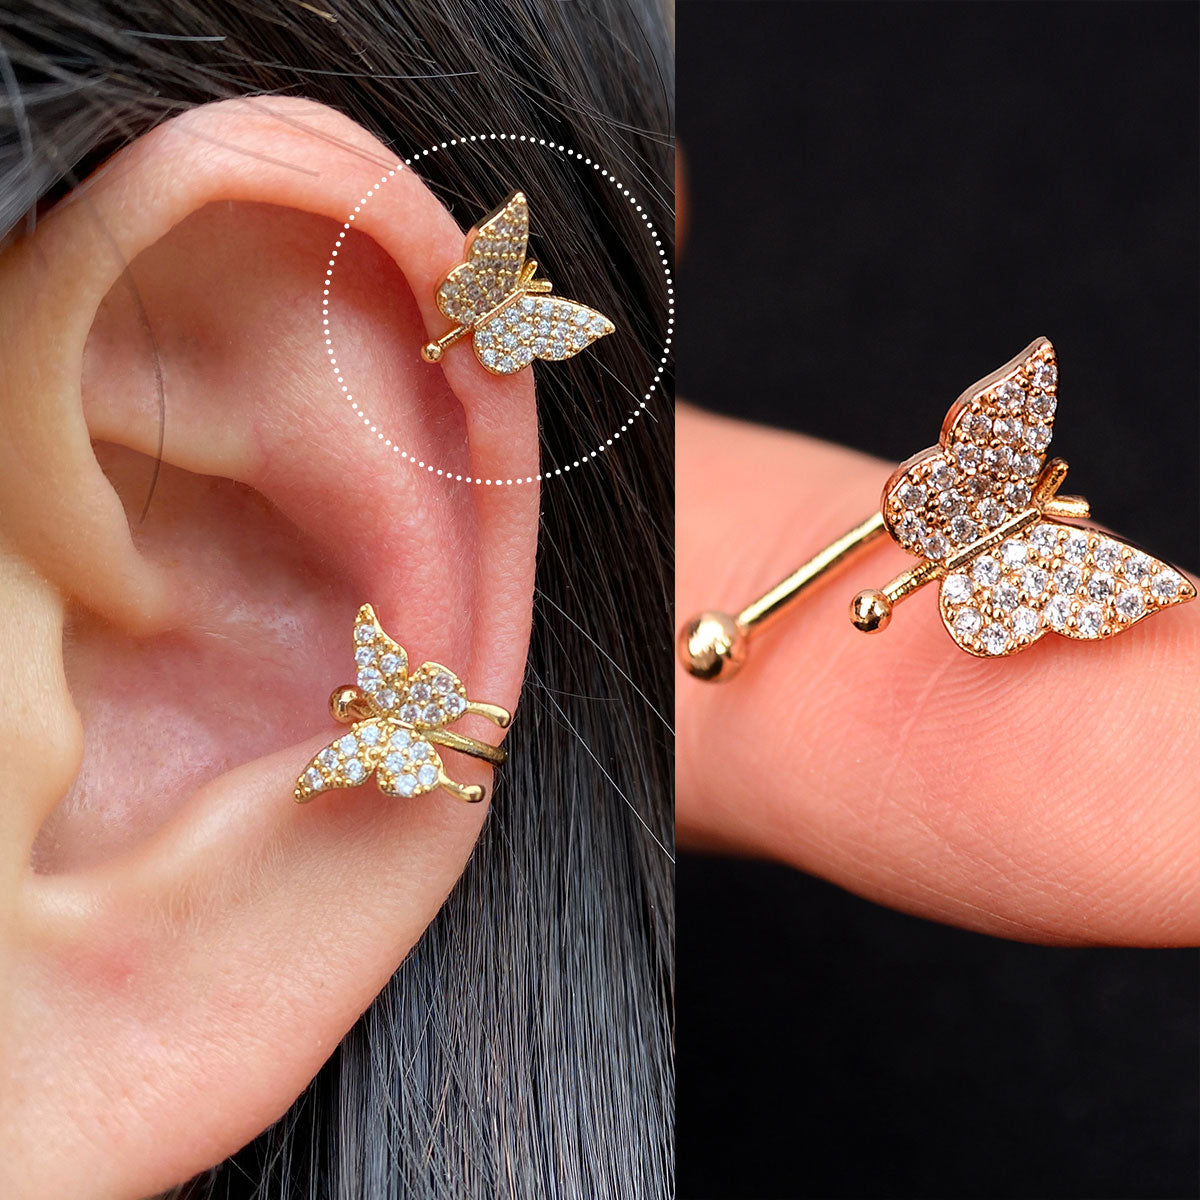 1Pc Helix Cartilage Conch Fake Without Piercing Ear Cuffs Earcuff Wrap Rock Earring Cuff No Piercing Women Clip Adjustable